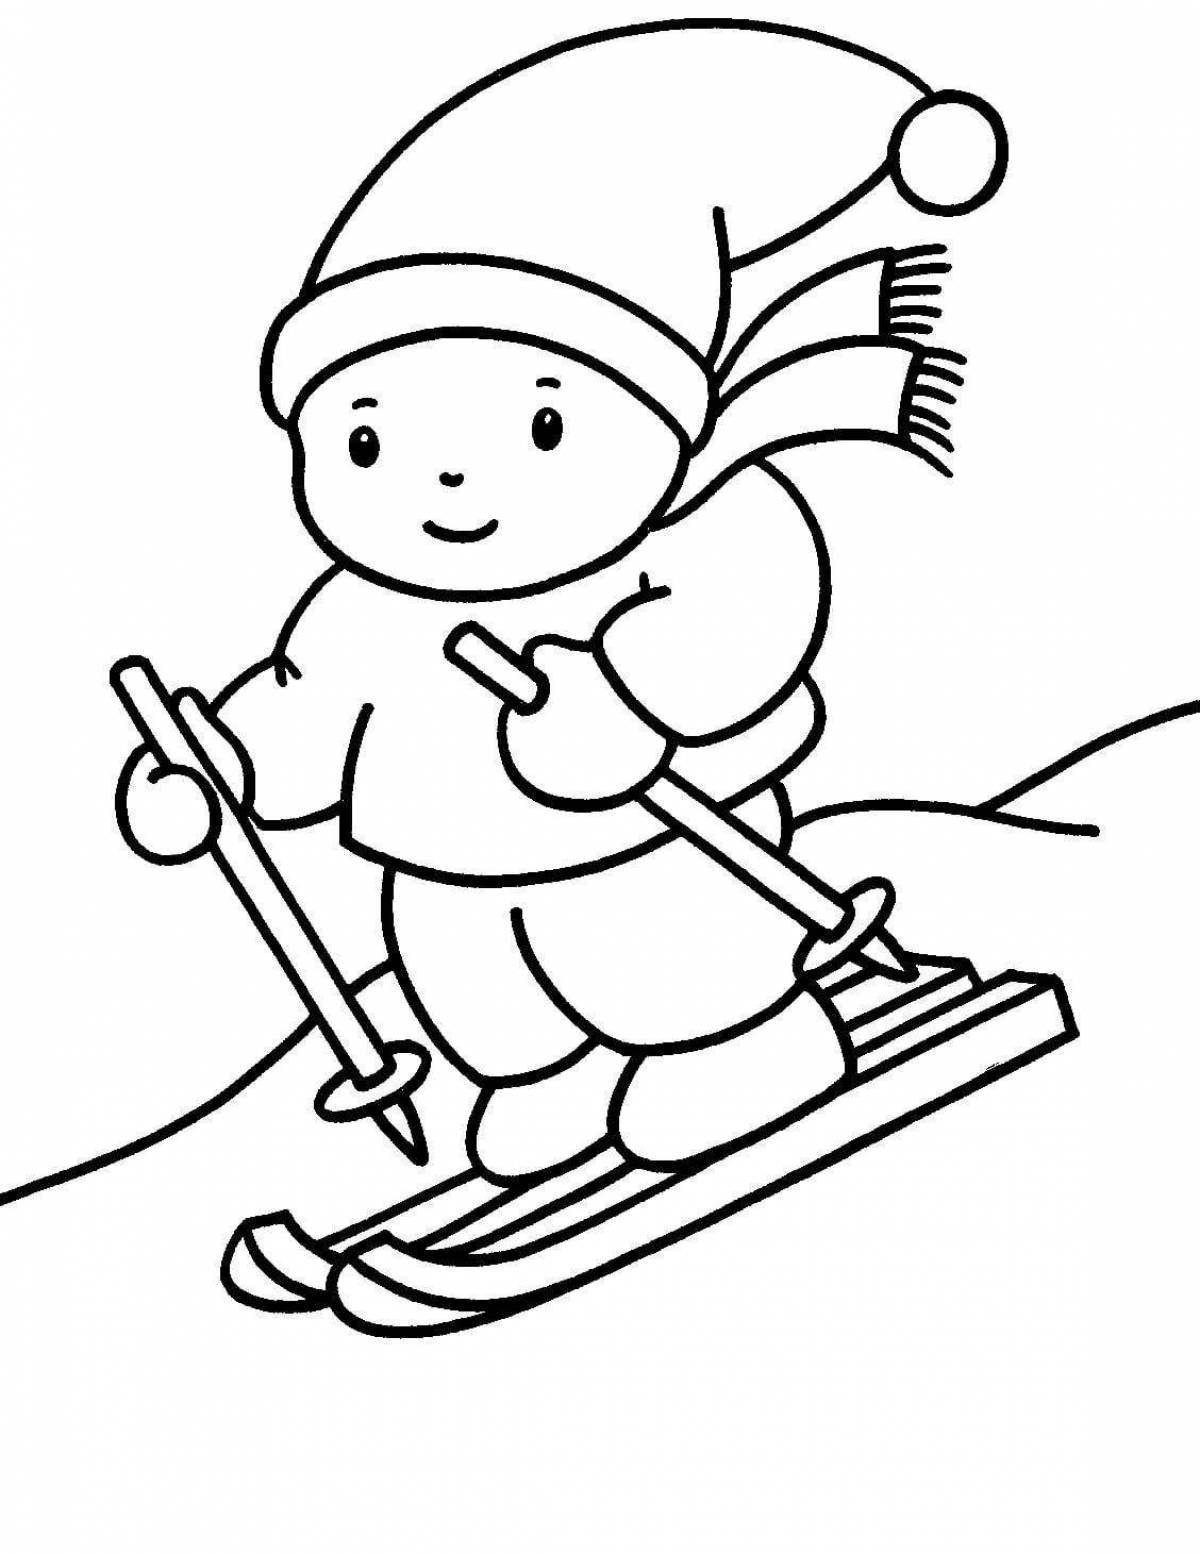 Joyful coloring book for kids winter sports